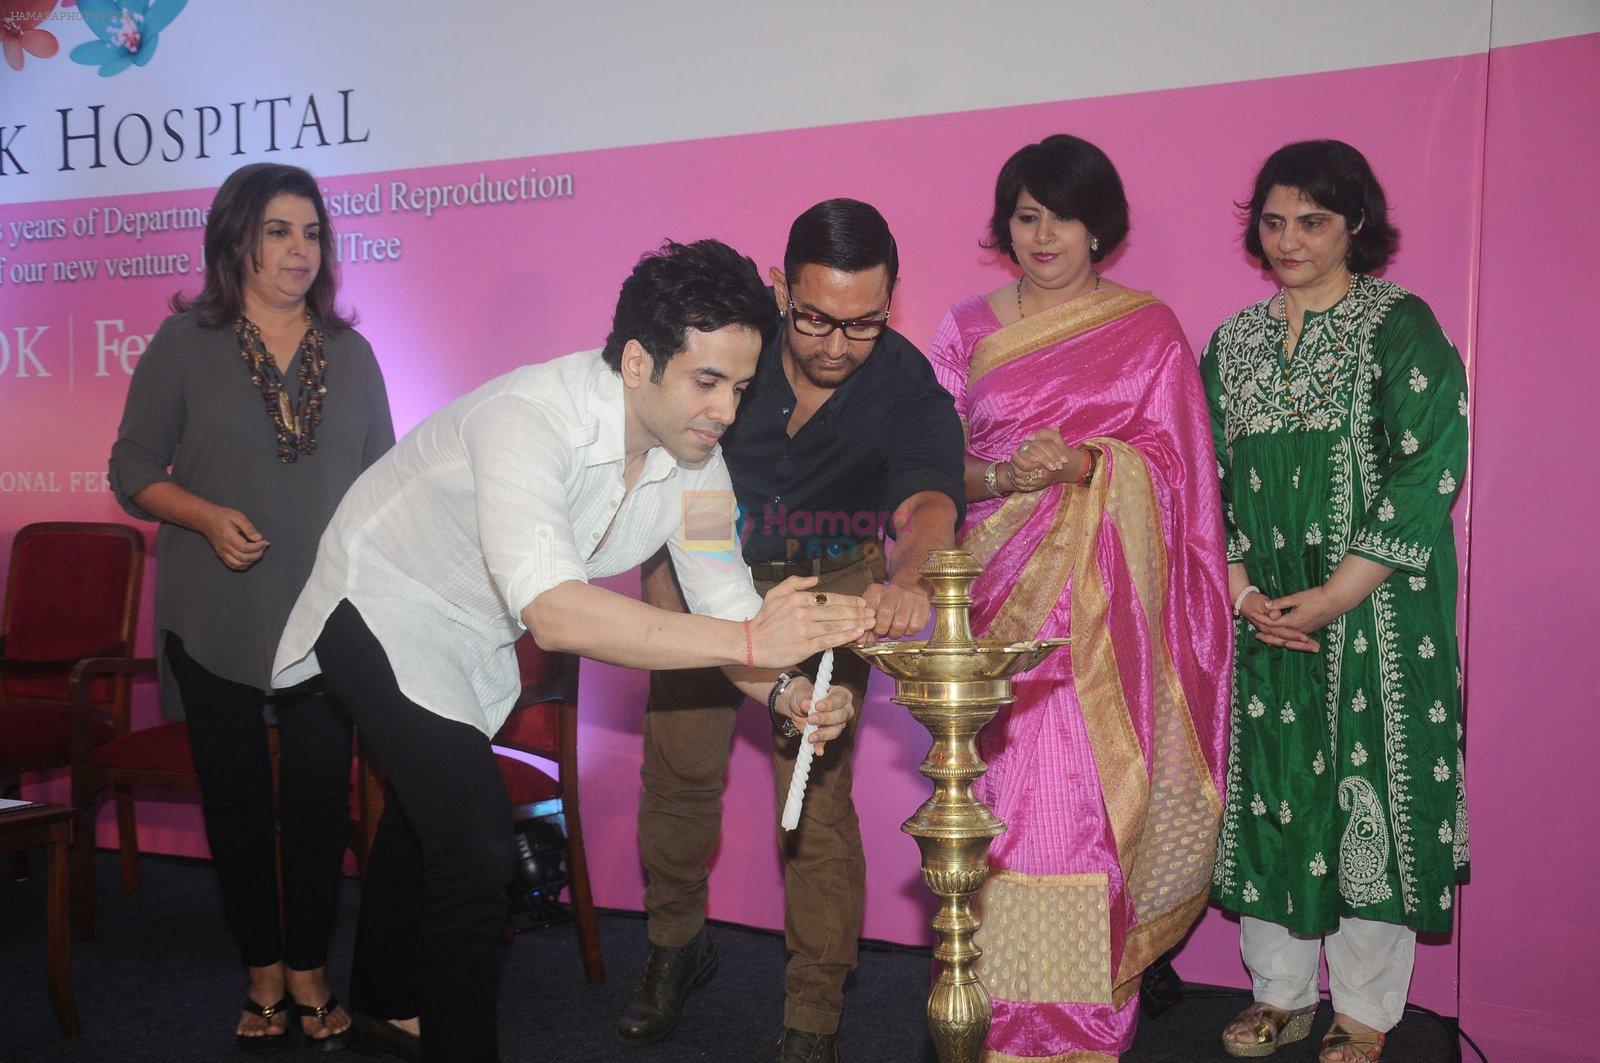 Aamir Khan, Tusshar Kapoor, Farah Khan launches Jaslok Fertility Tree on 15th Aug 2016